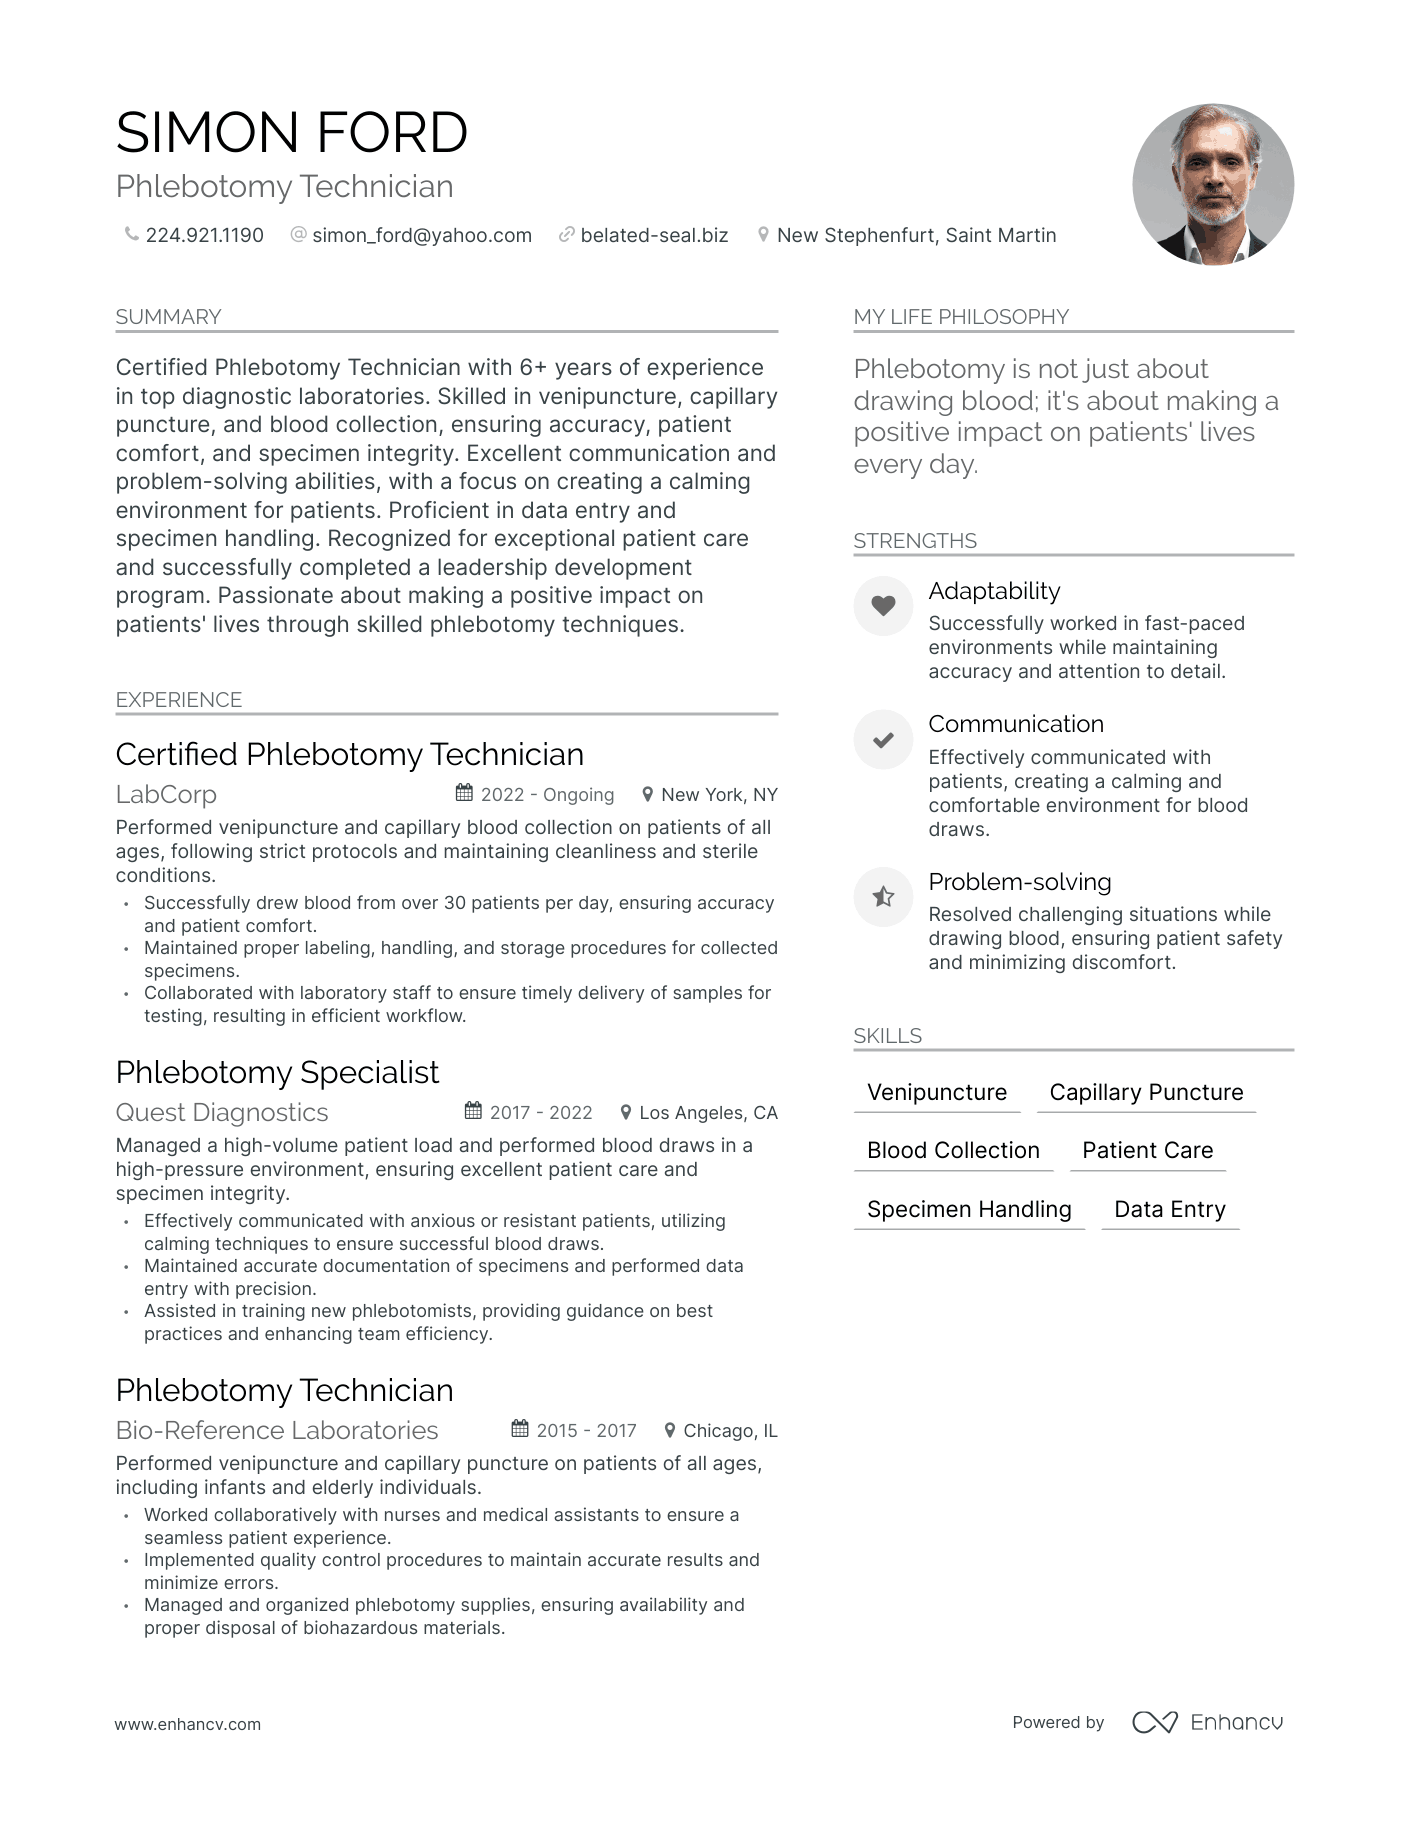 Phlebotomy Technician resume example